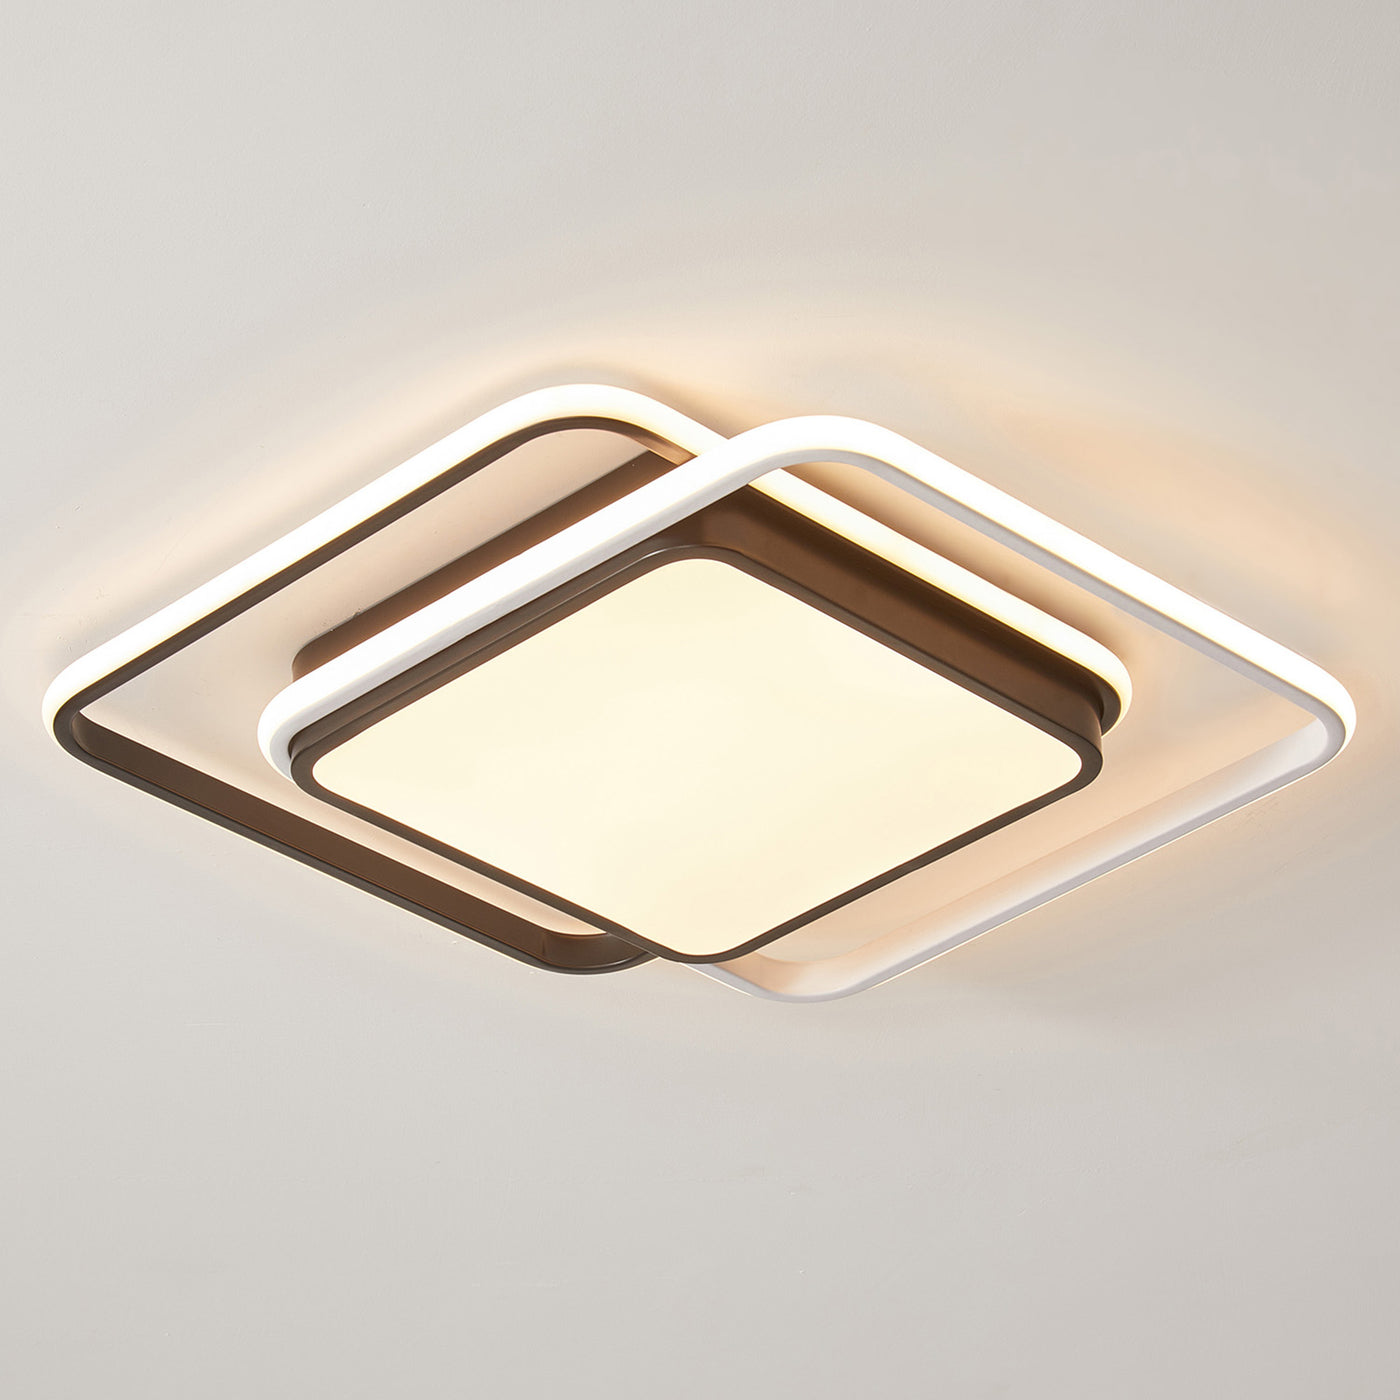 3-Lights Acrylic Square LED Flush Mount Lighting